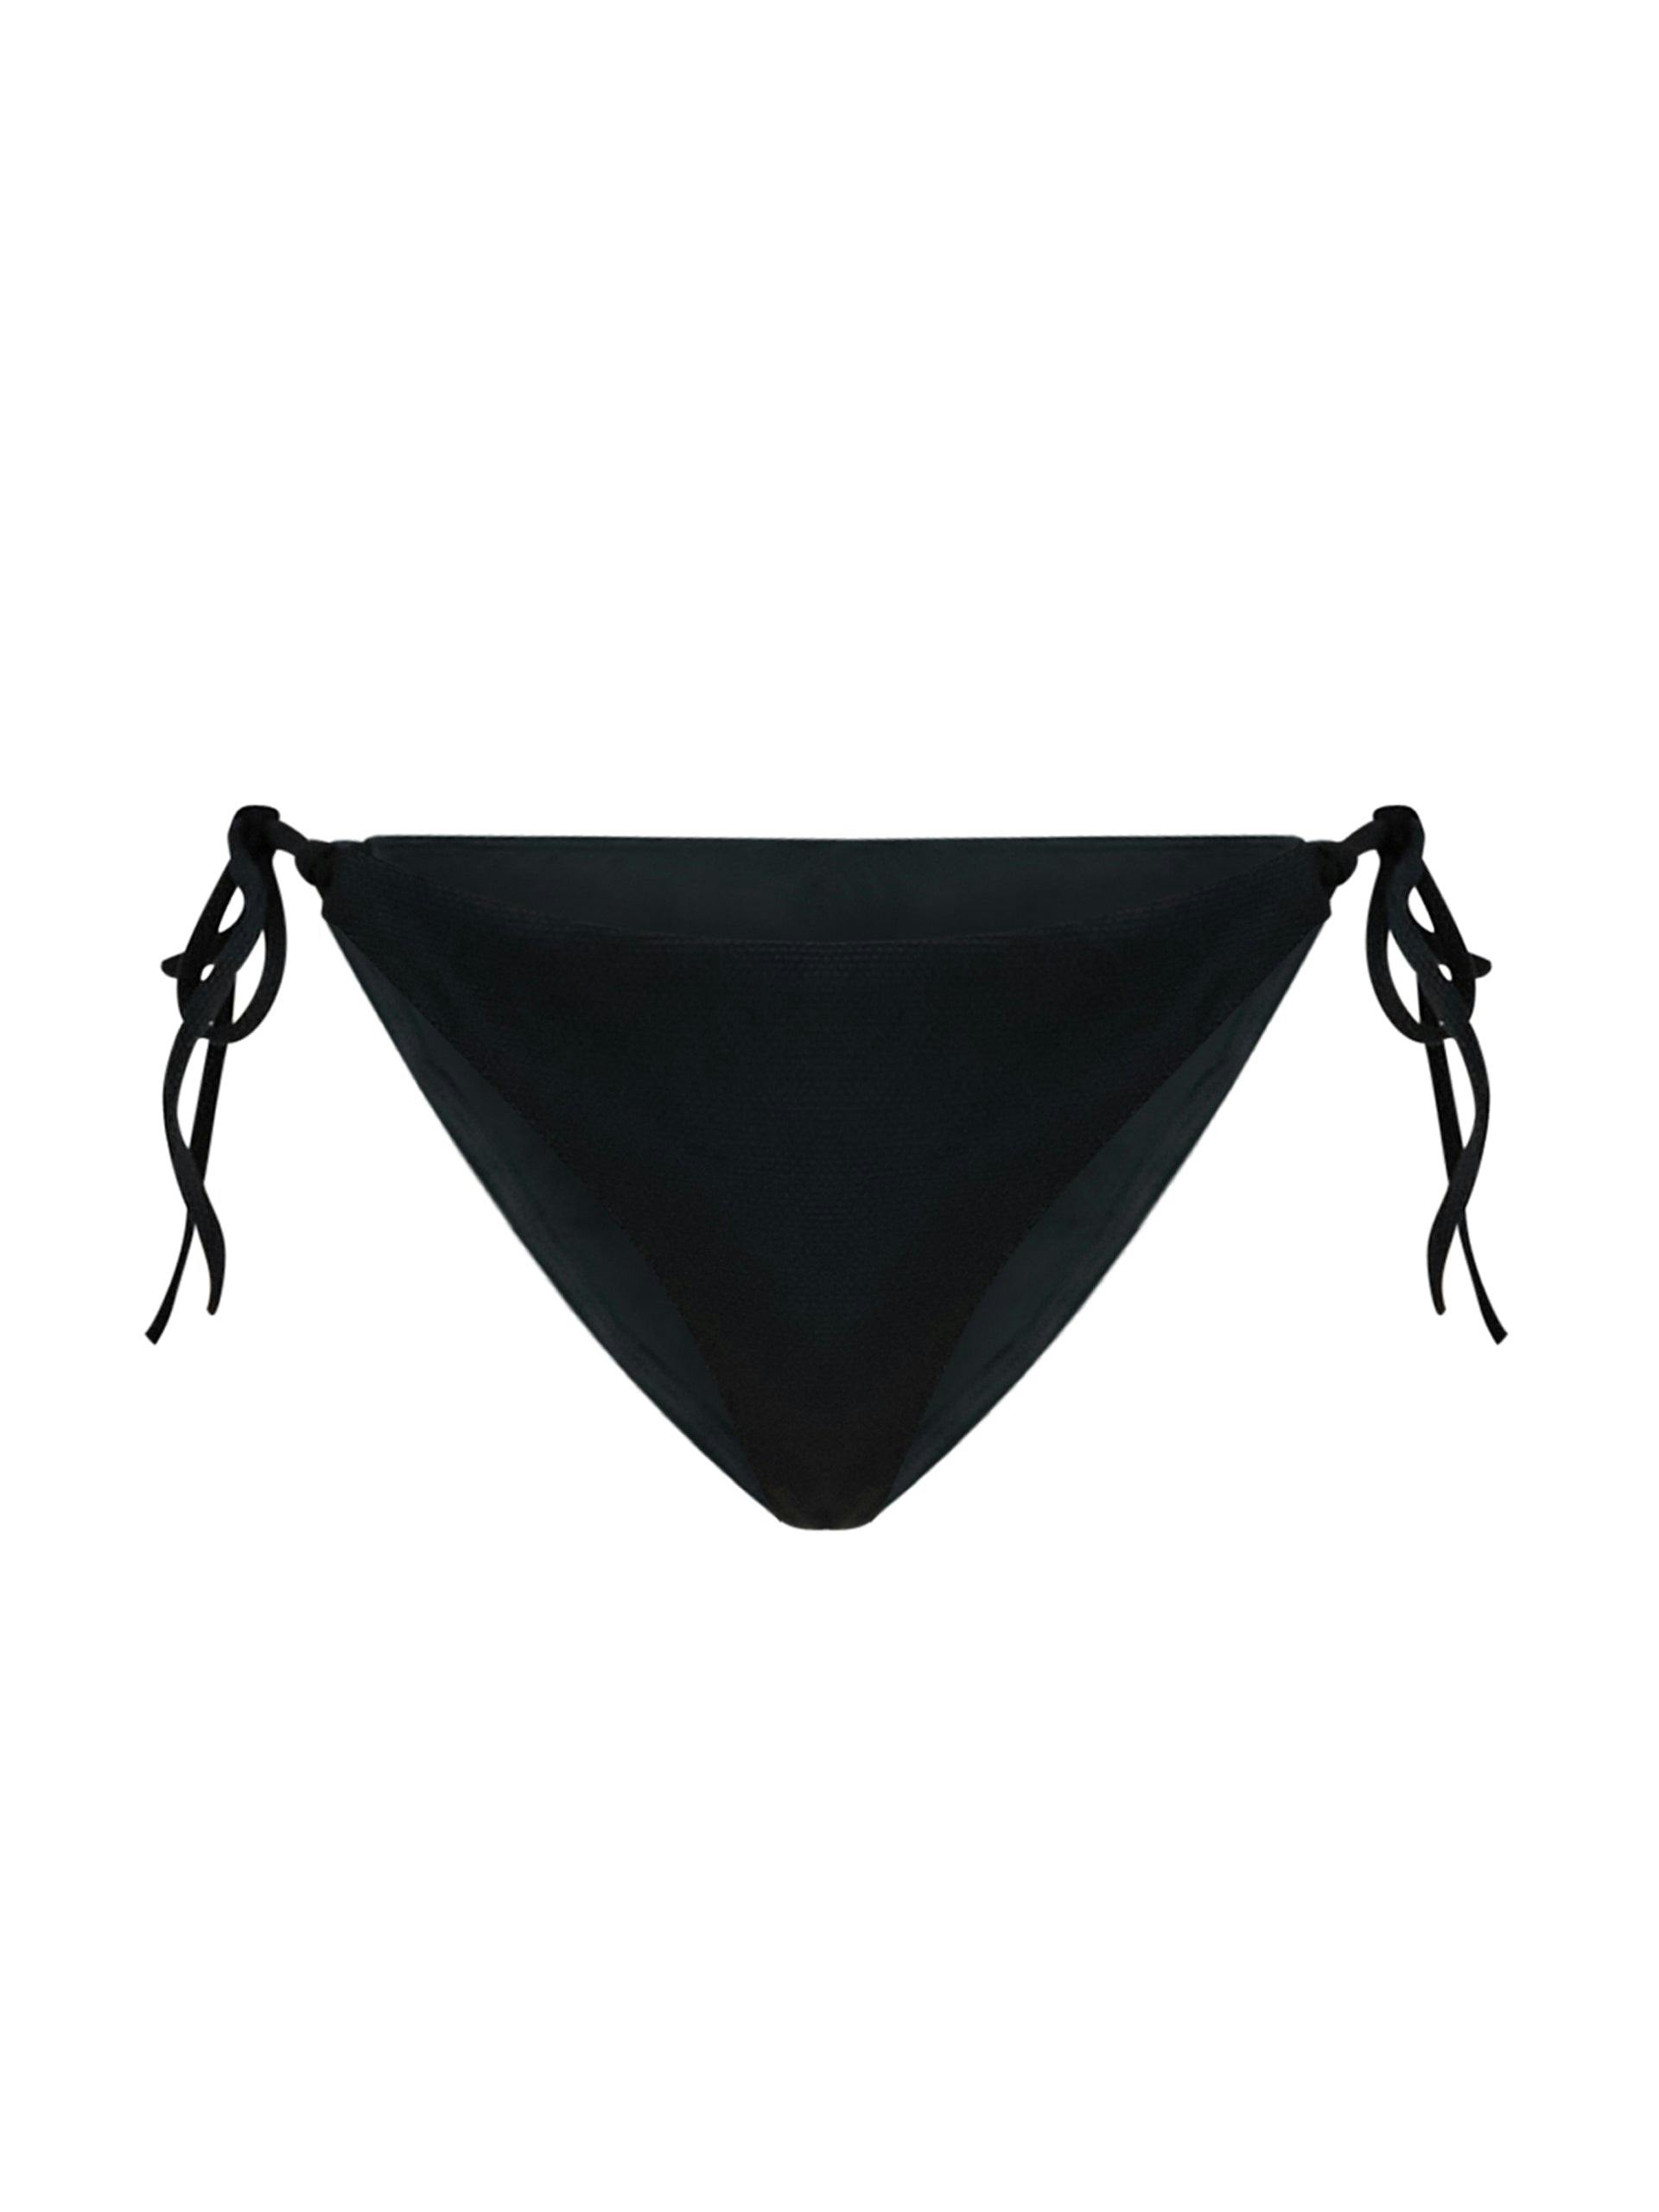 Dafne black triangle bikini bottom